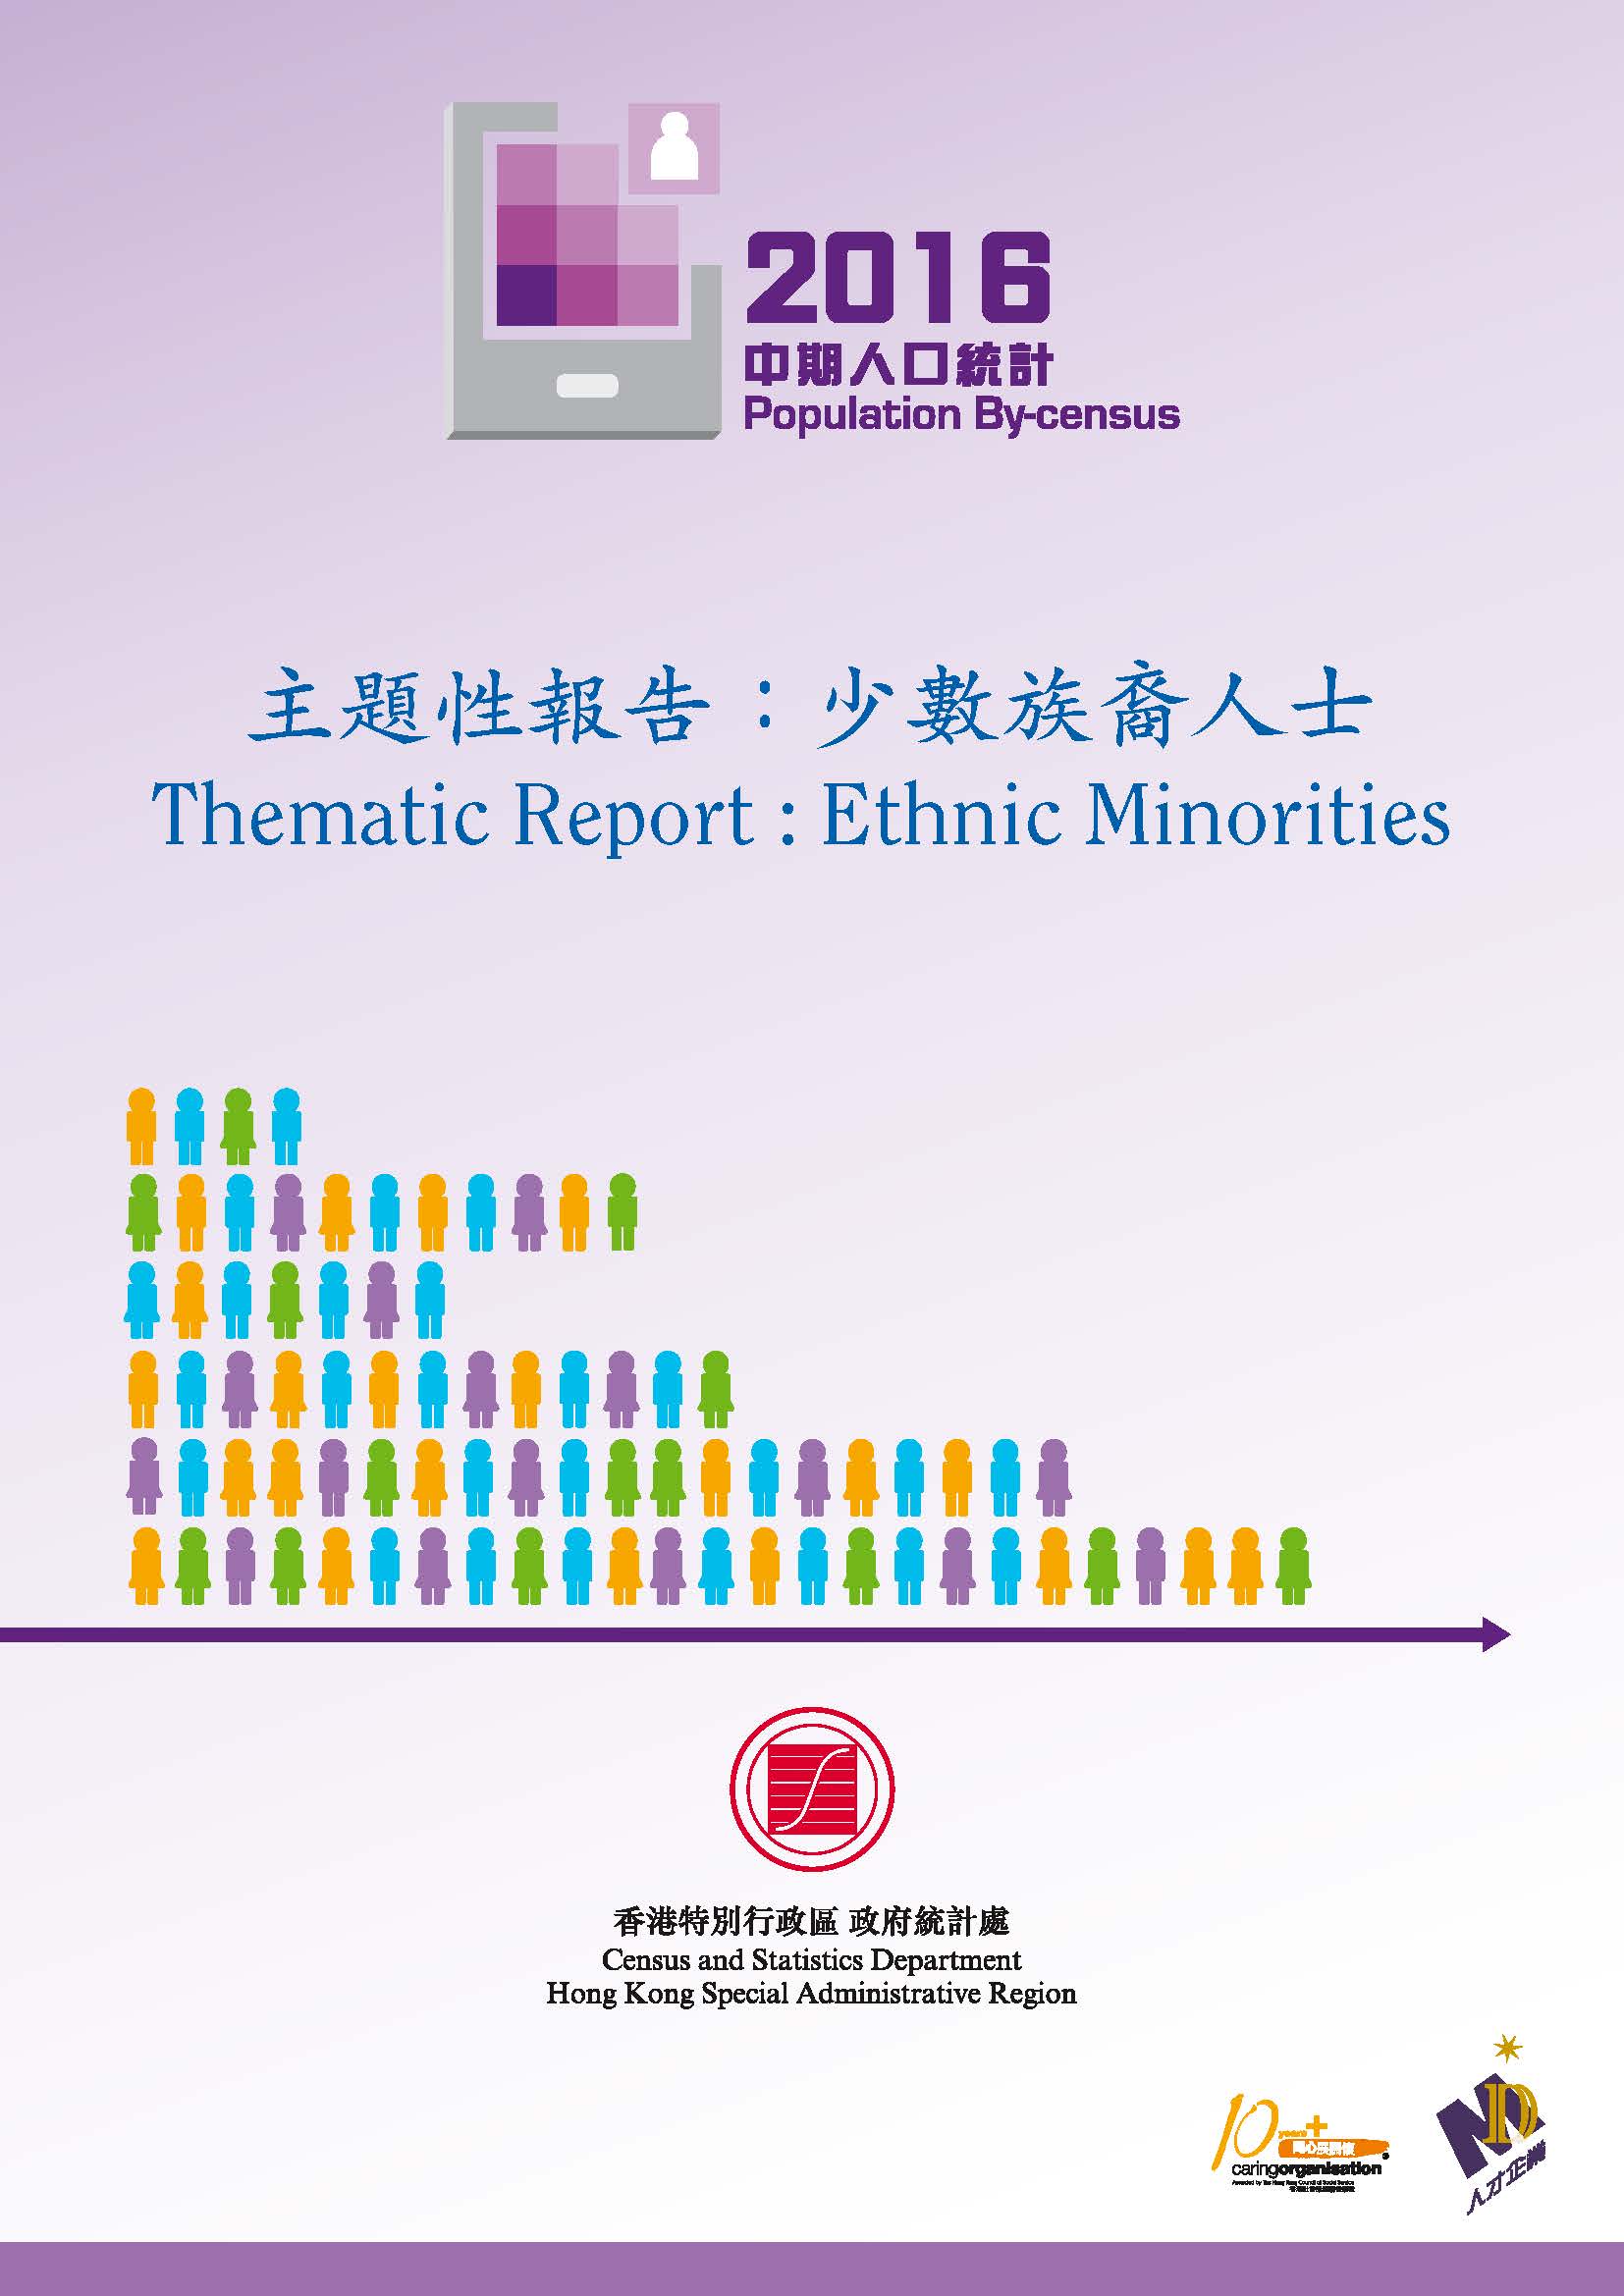 2016 Population By-census - Thematic Report: Ethnic Minorities